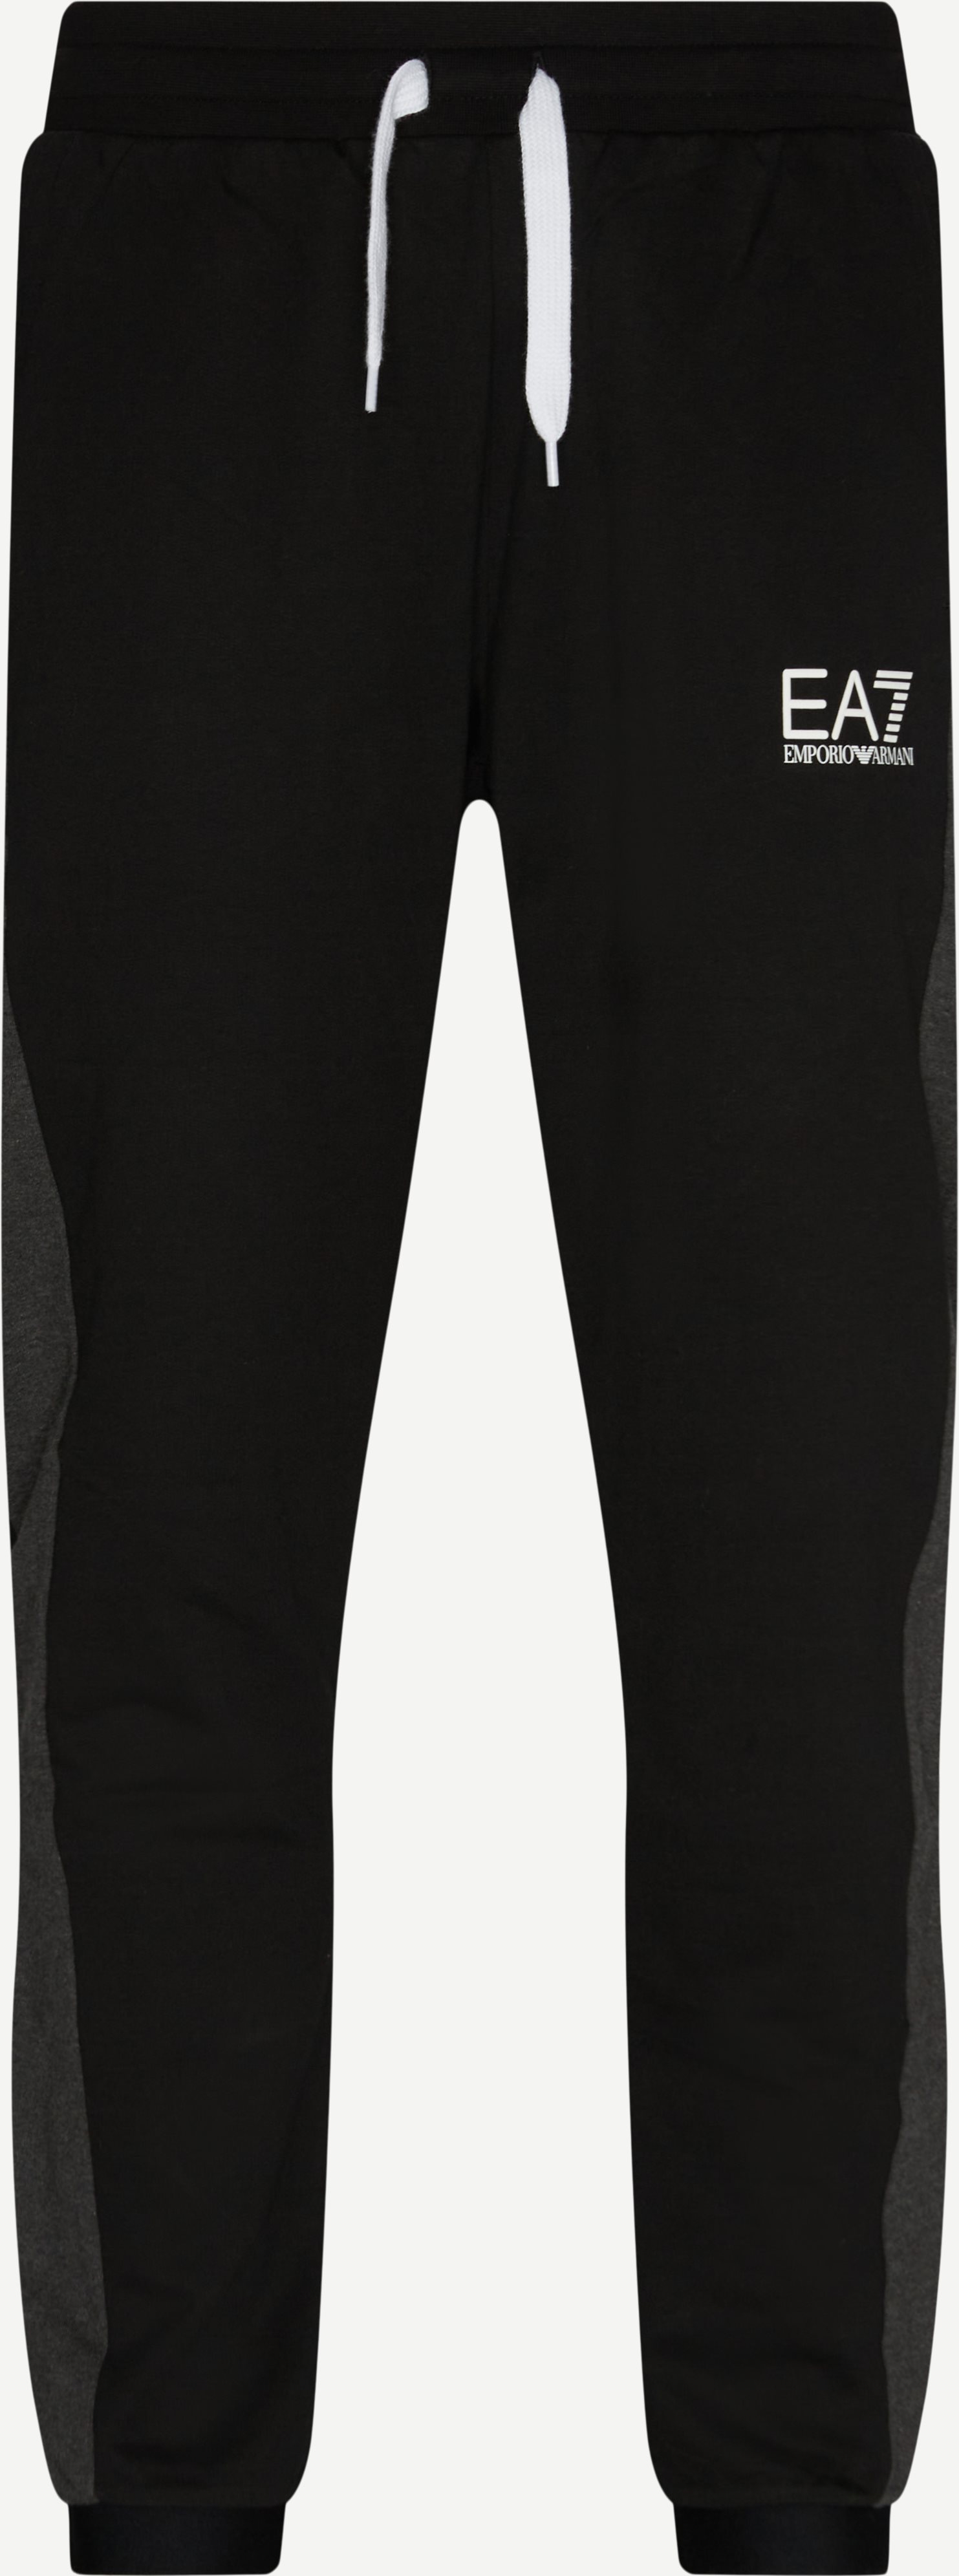 6KPV64 Sweatpants - Trousers - Regular fit - Black